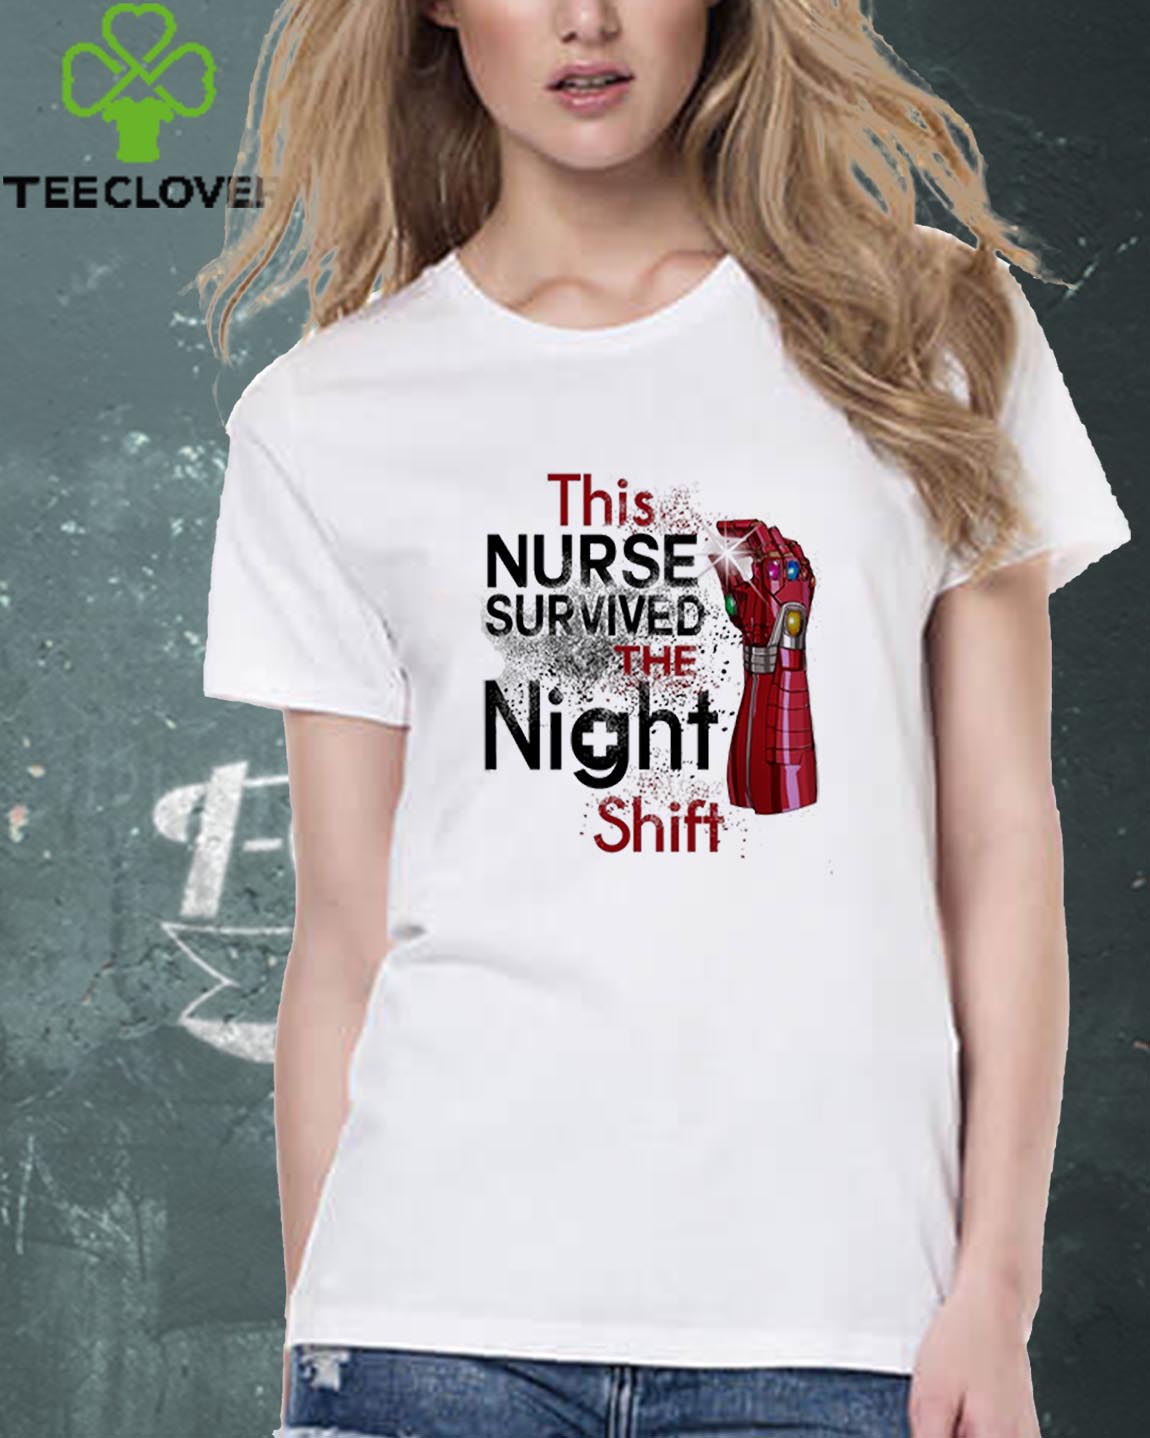 Iron Man Nano Gauntlet This nurse survived the night shift